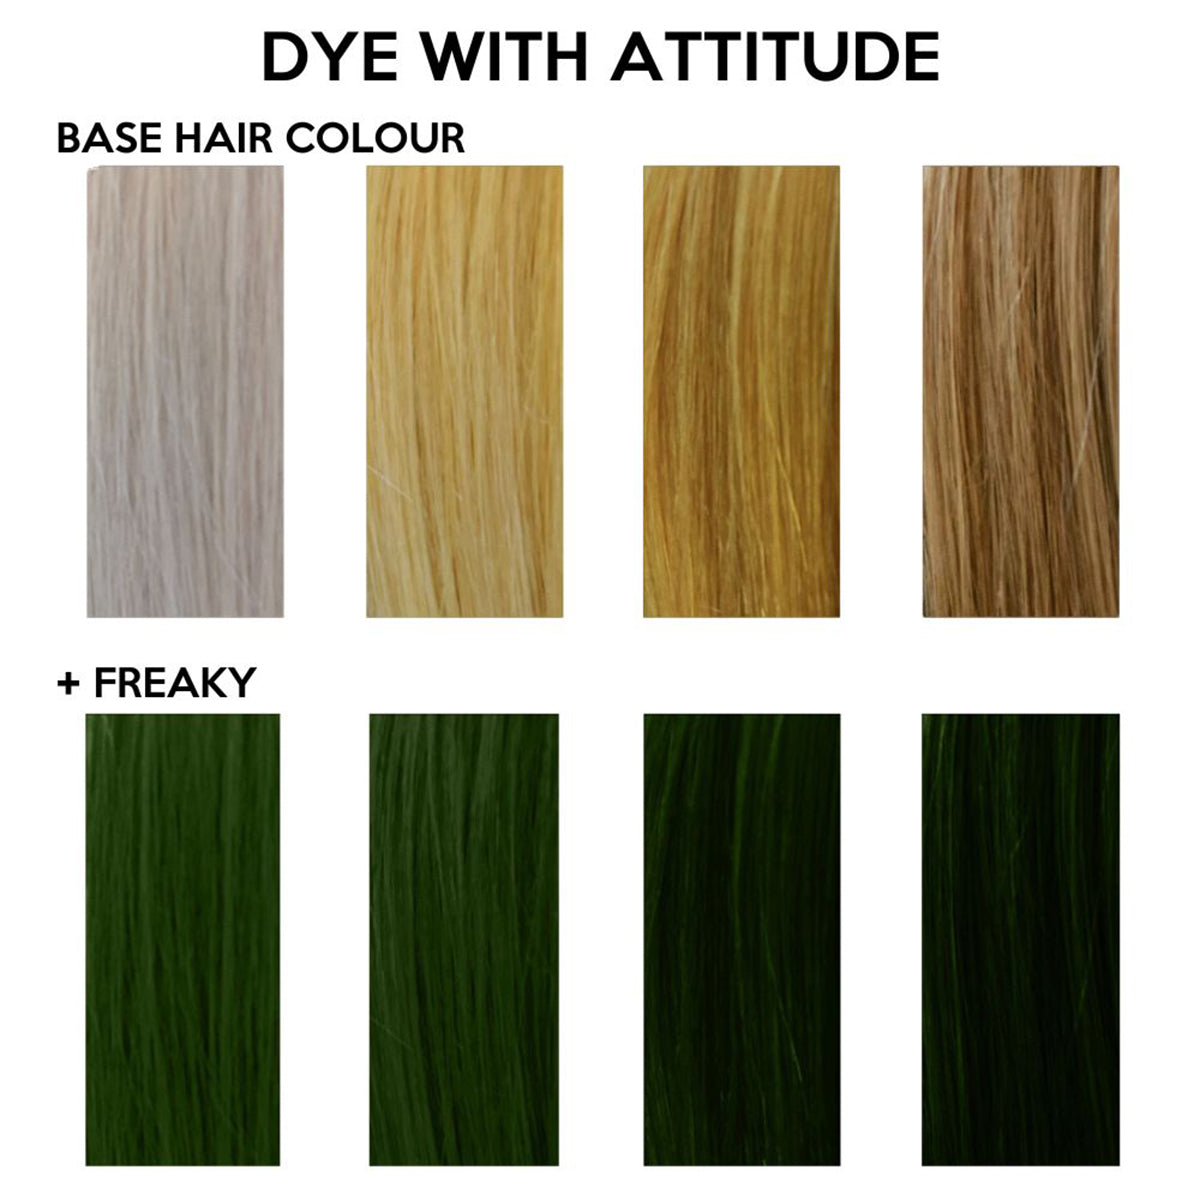 FREAKY OLIVE GREEN - Attitude Hair Dye - 135ml